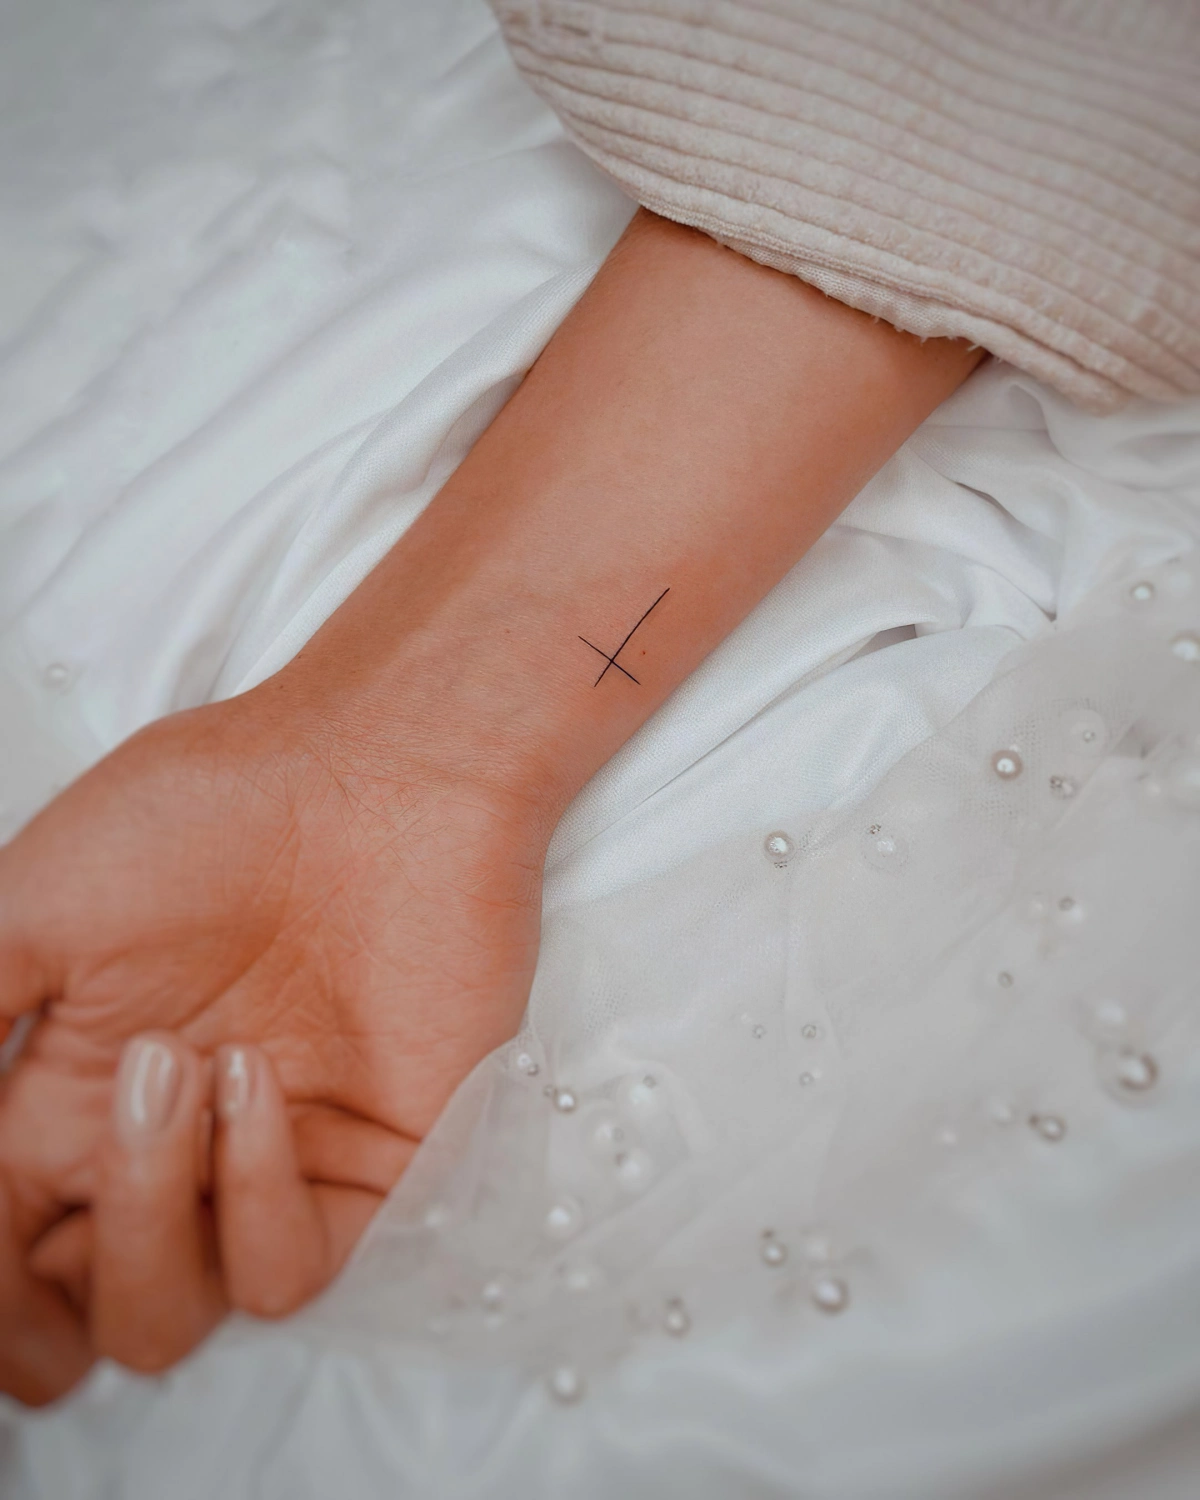 tatouage poignet femme discret croix minimaliste dessin lignes fines